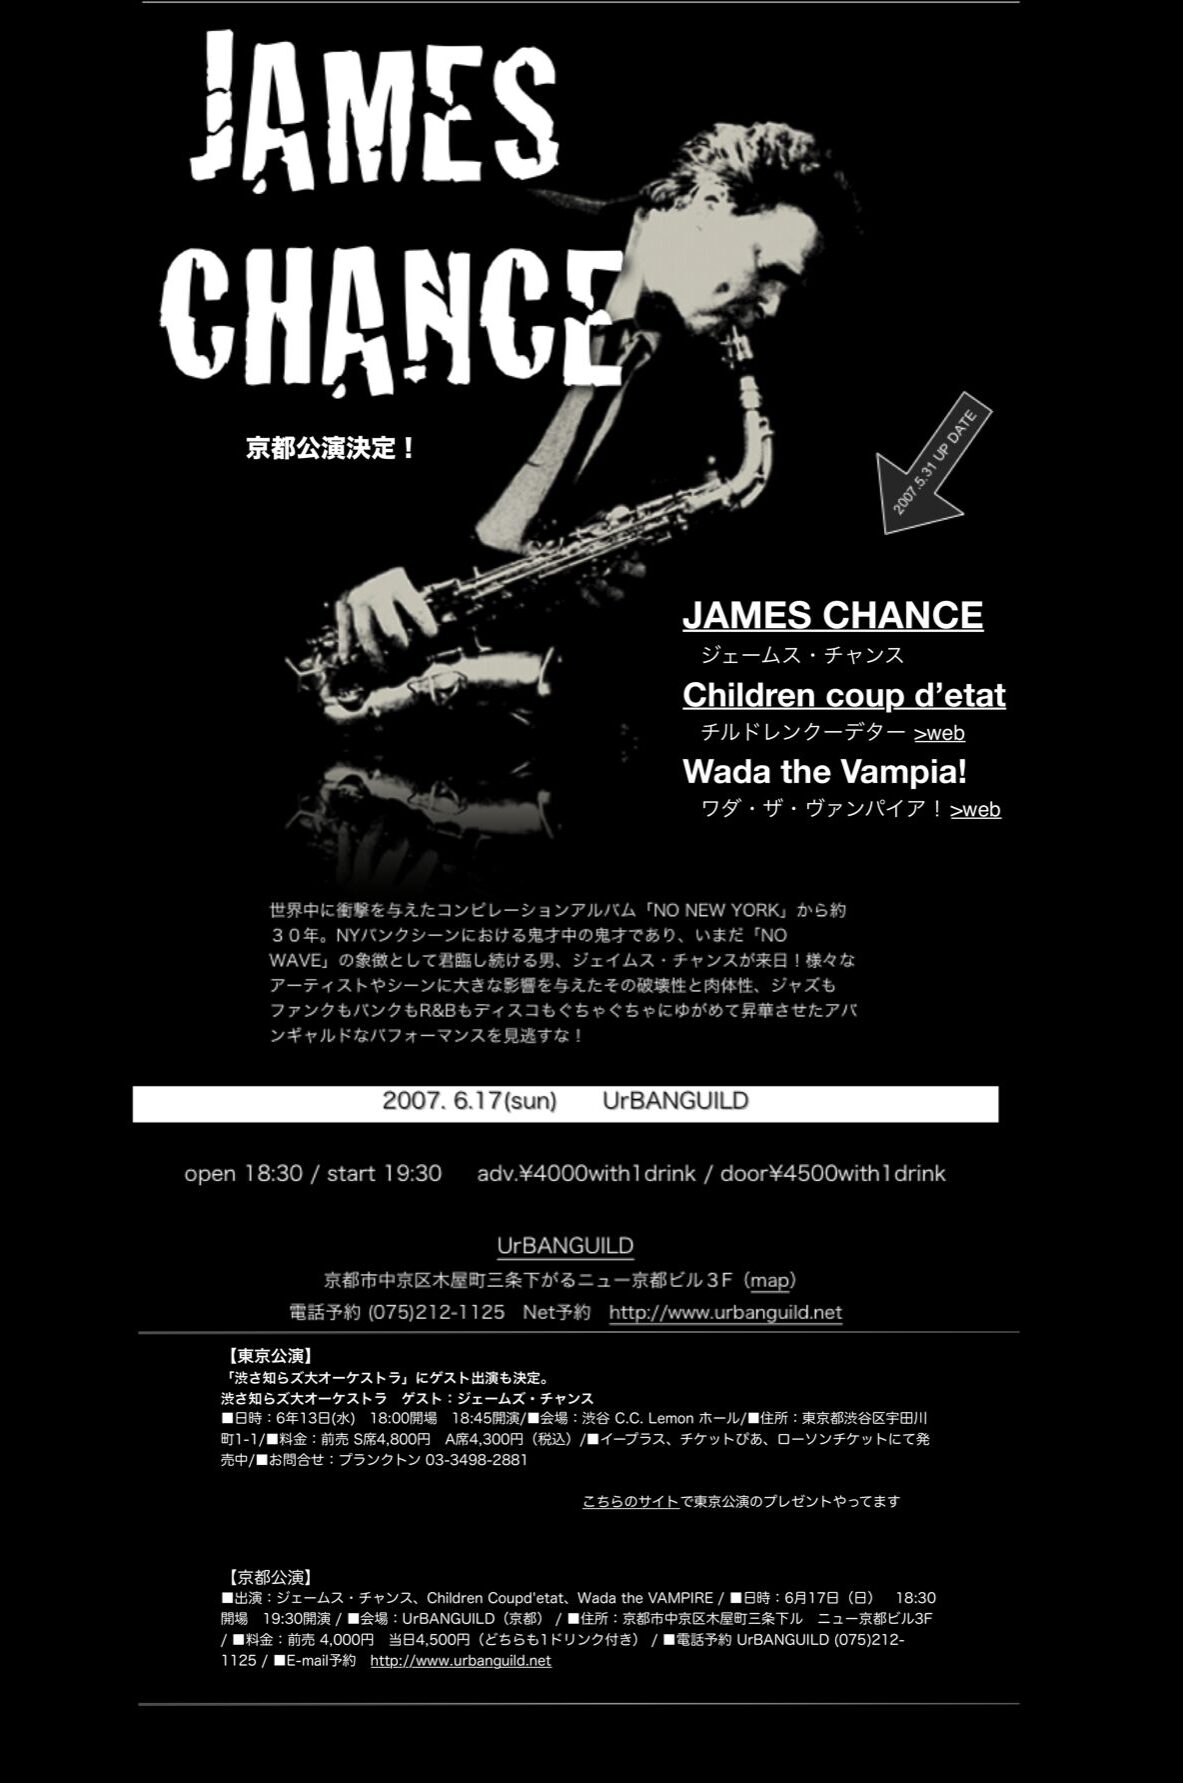 JAMES CHANCE live